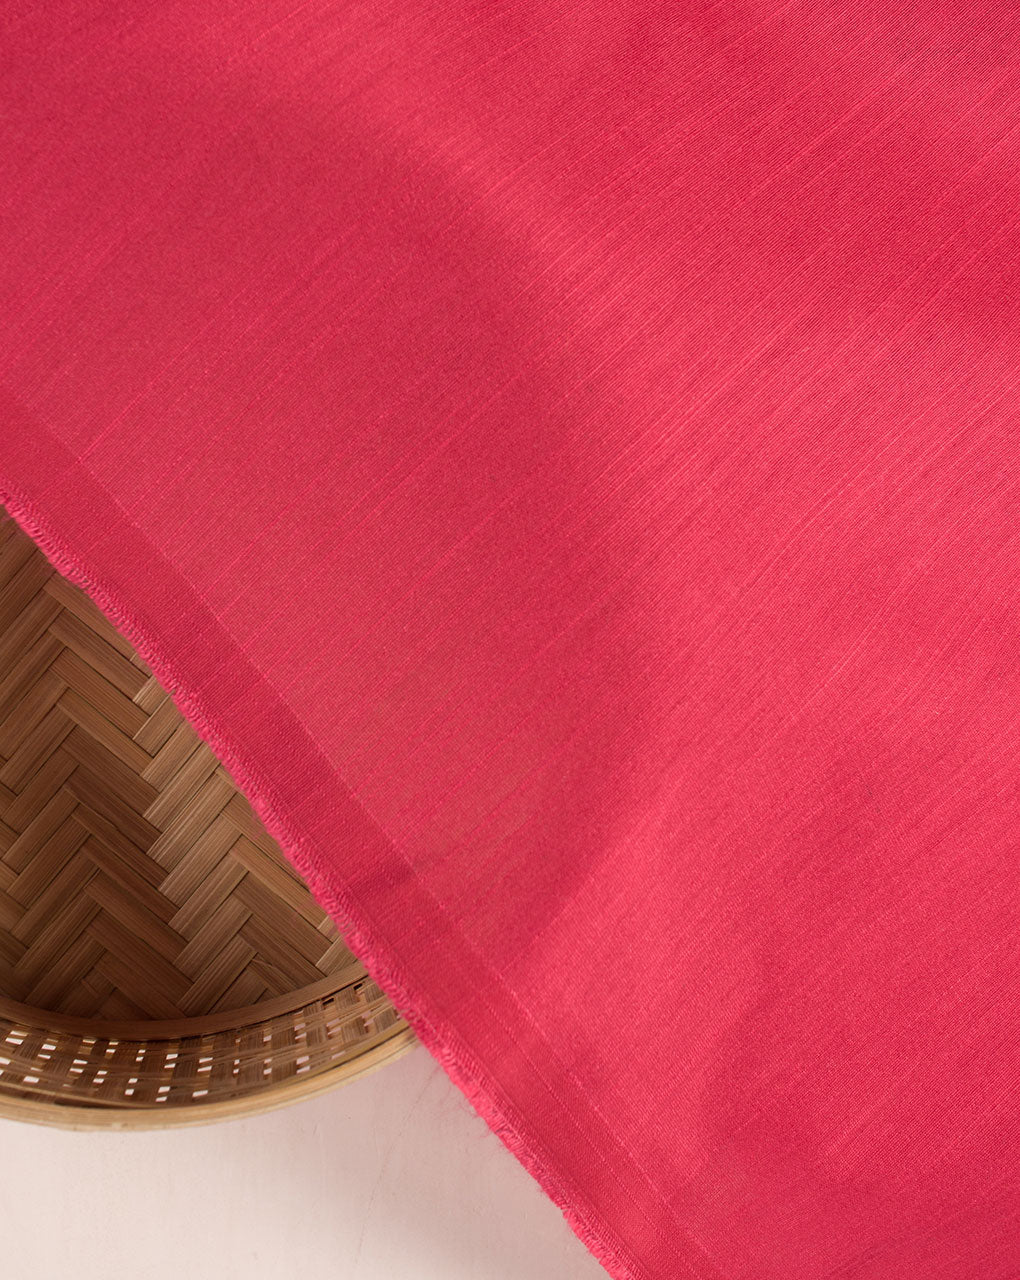 Crimson Red Woven Poly Viscose Fabric